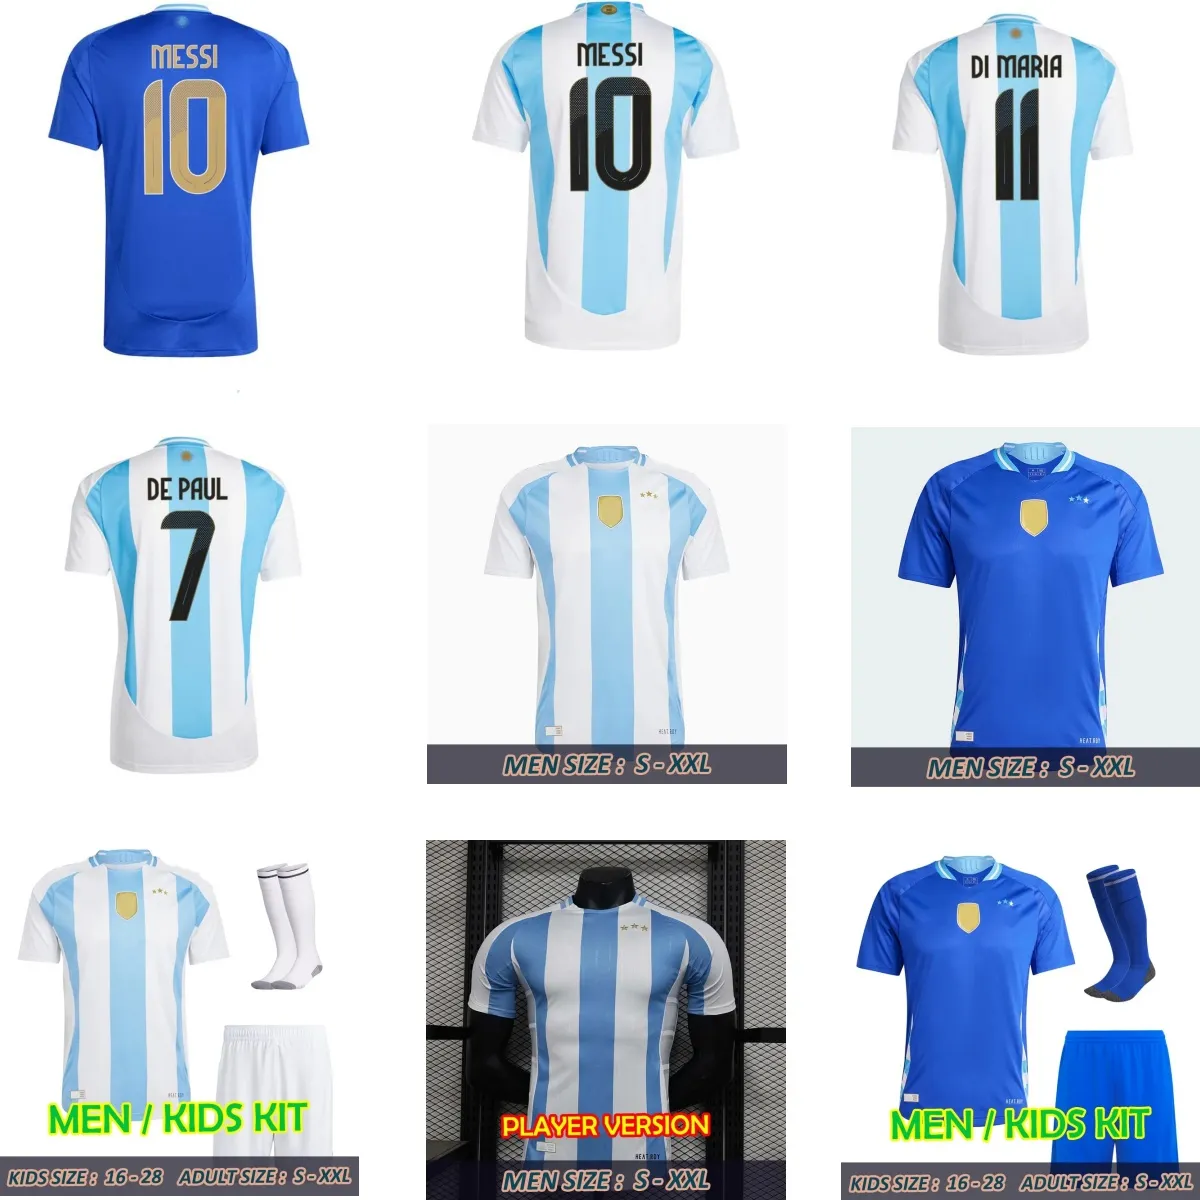 The new 1: 1Aargentina 3 Star Soccer Jerseys2425 CommemoTive Fans Player Version Messis Mac Allister Dybala Di Maria Martinez de Paul Maradona Childs Kit Men shirt